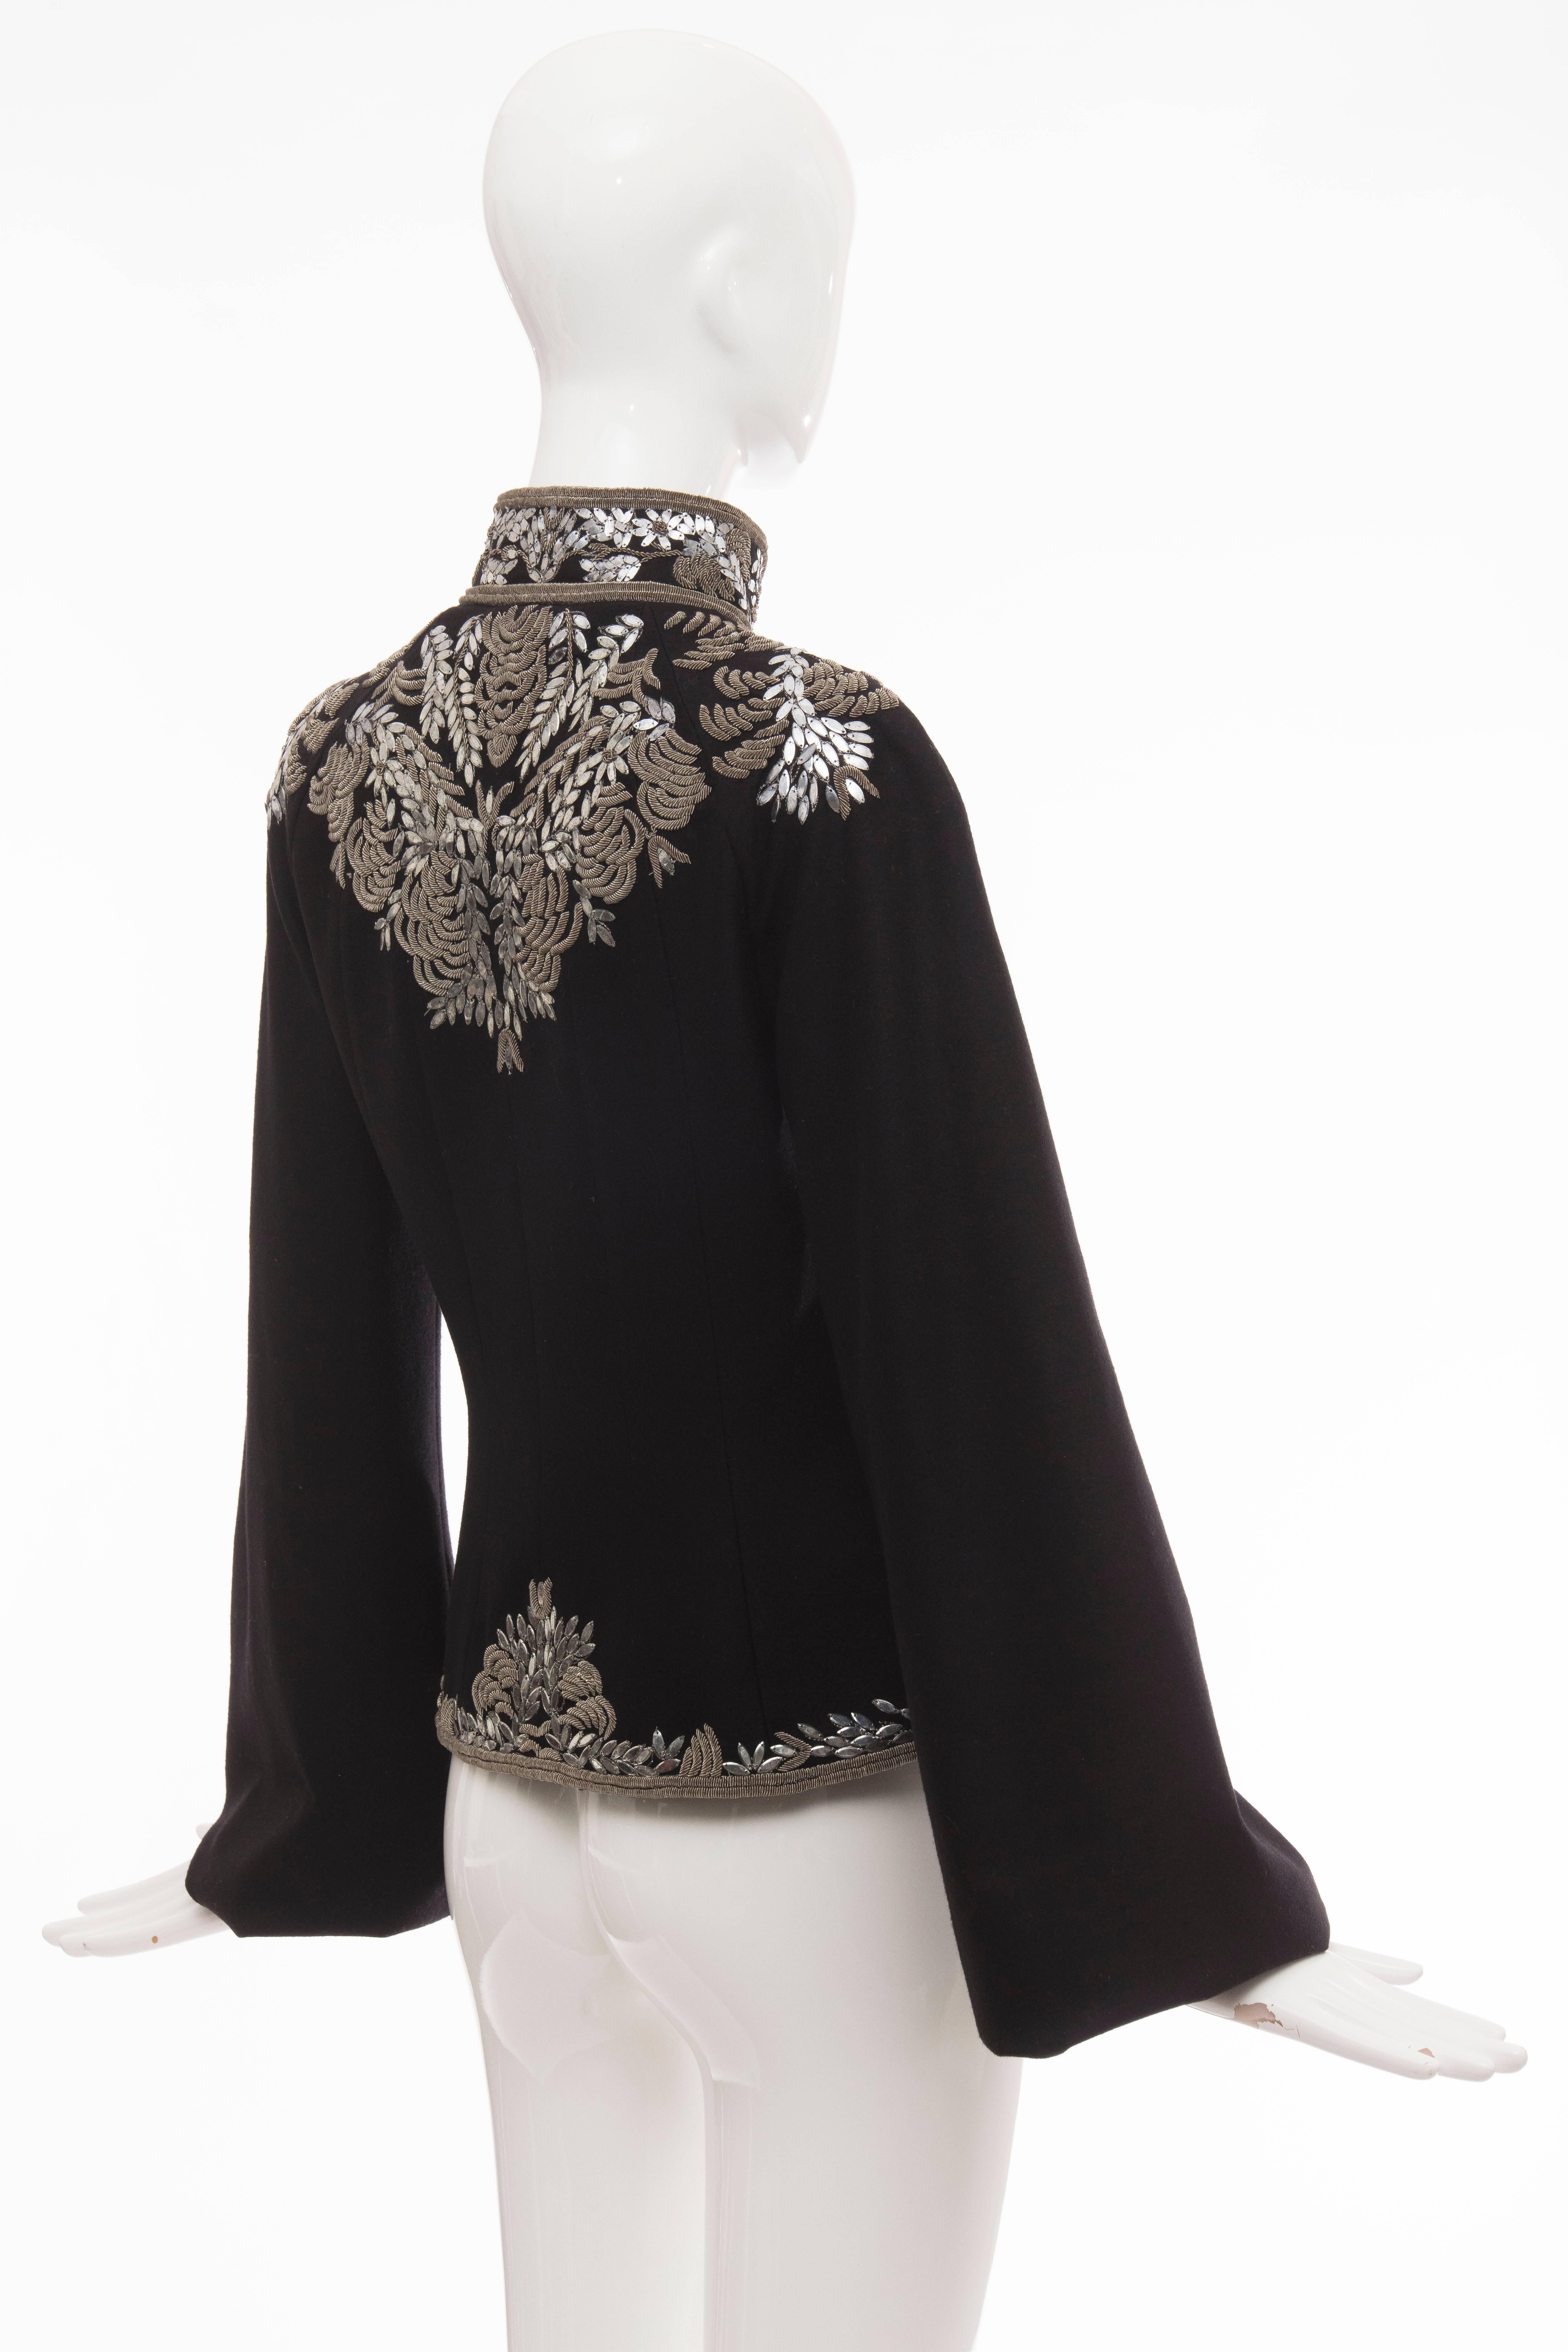 Women's Alexander McQueen Black Wool Zip Front Embroidered Jacket, Circa 2004 For Sale